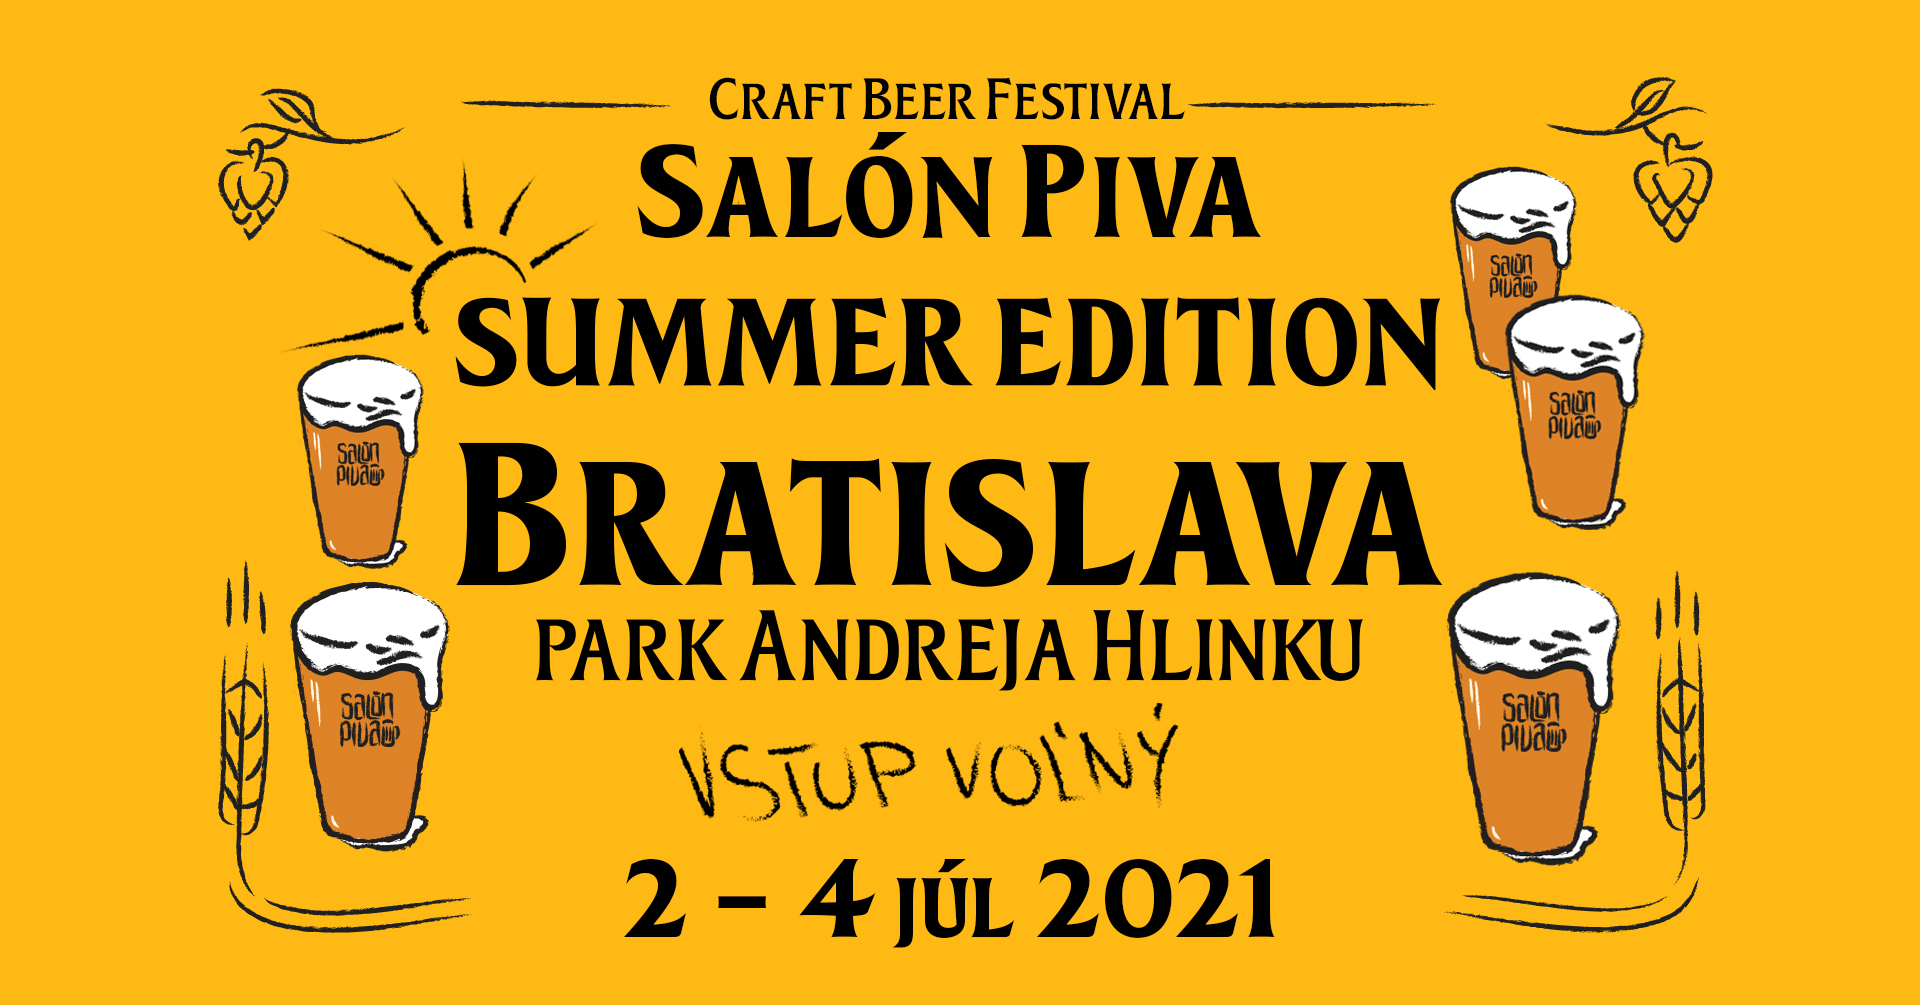 NOV - - - Saln Piva Summer 2021 Bratislava